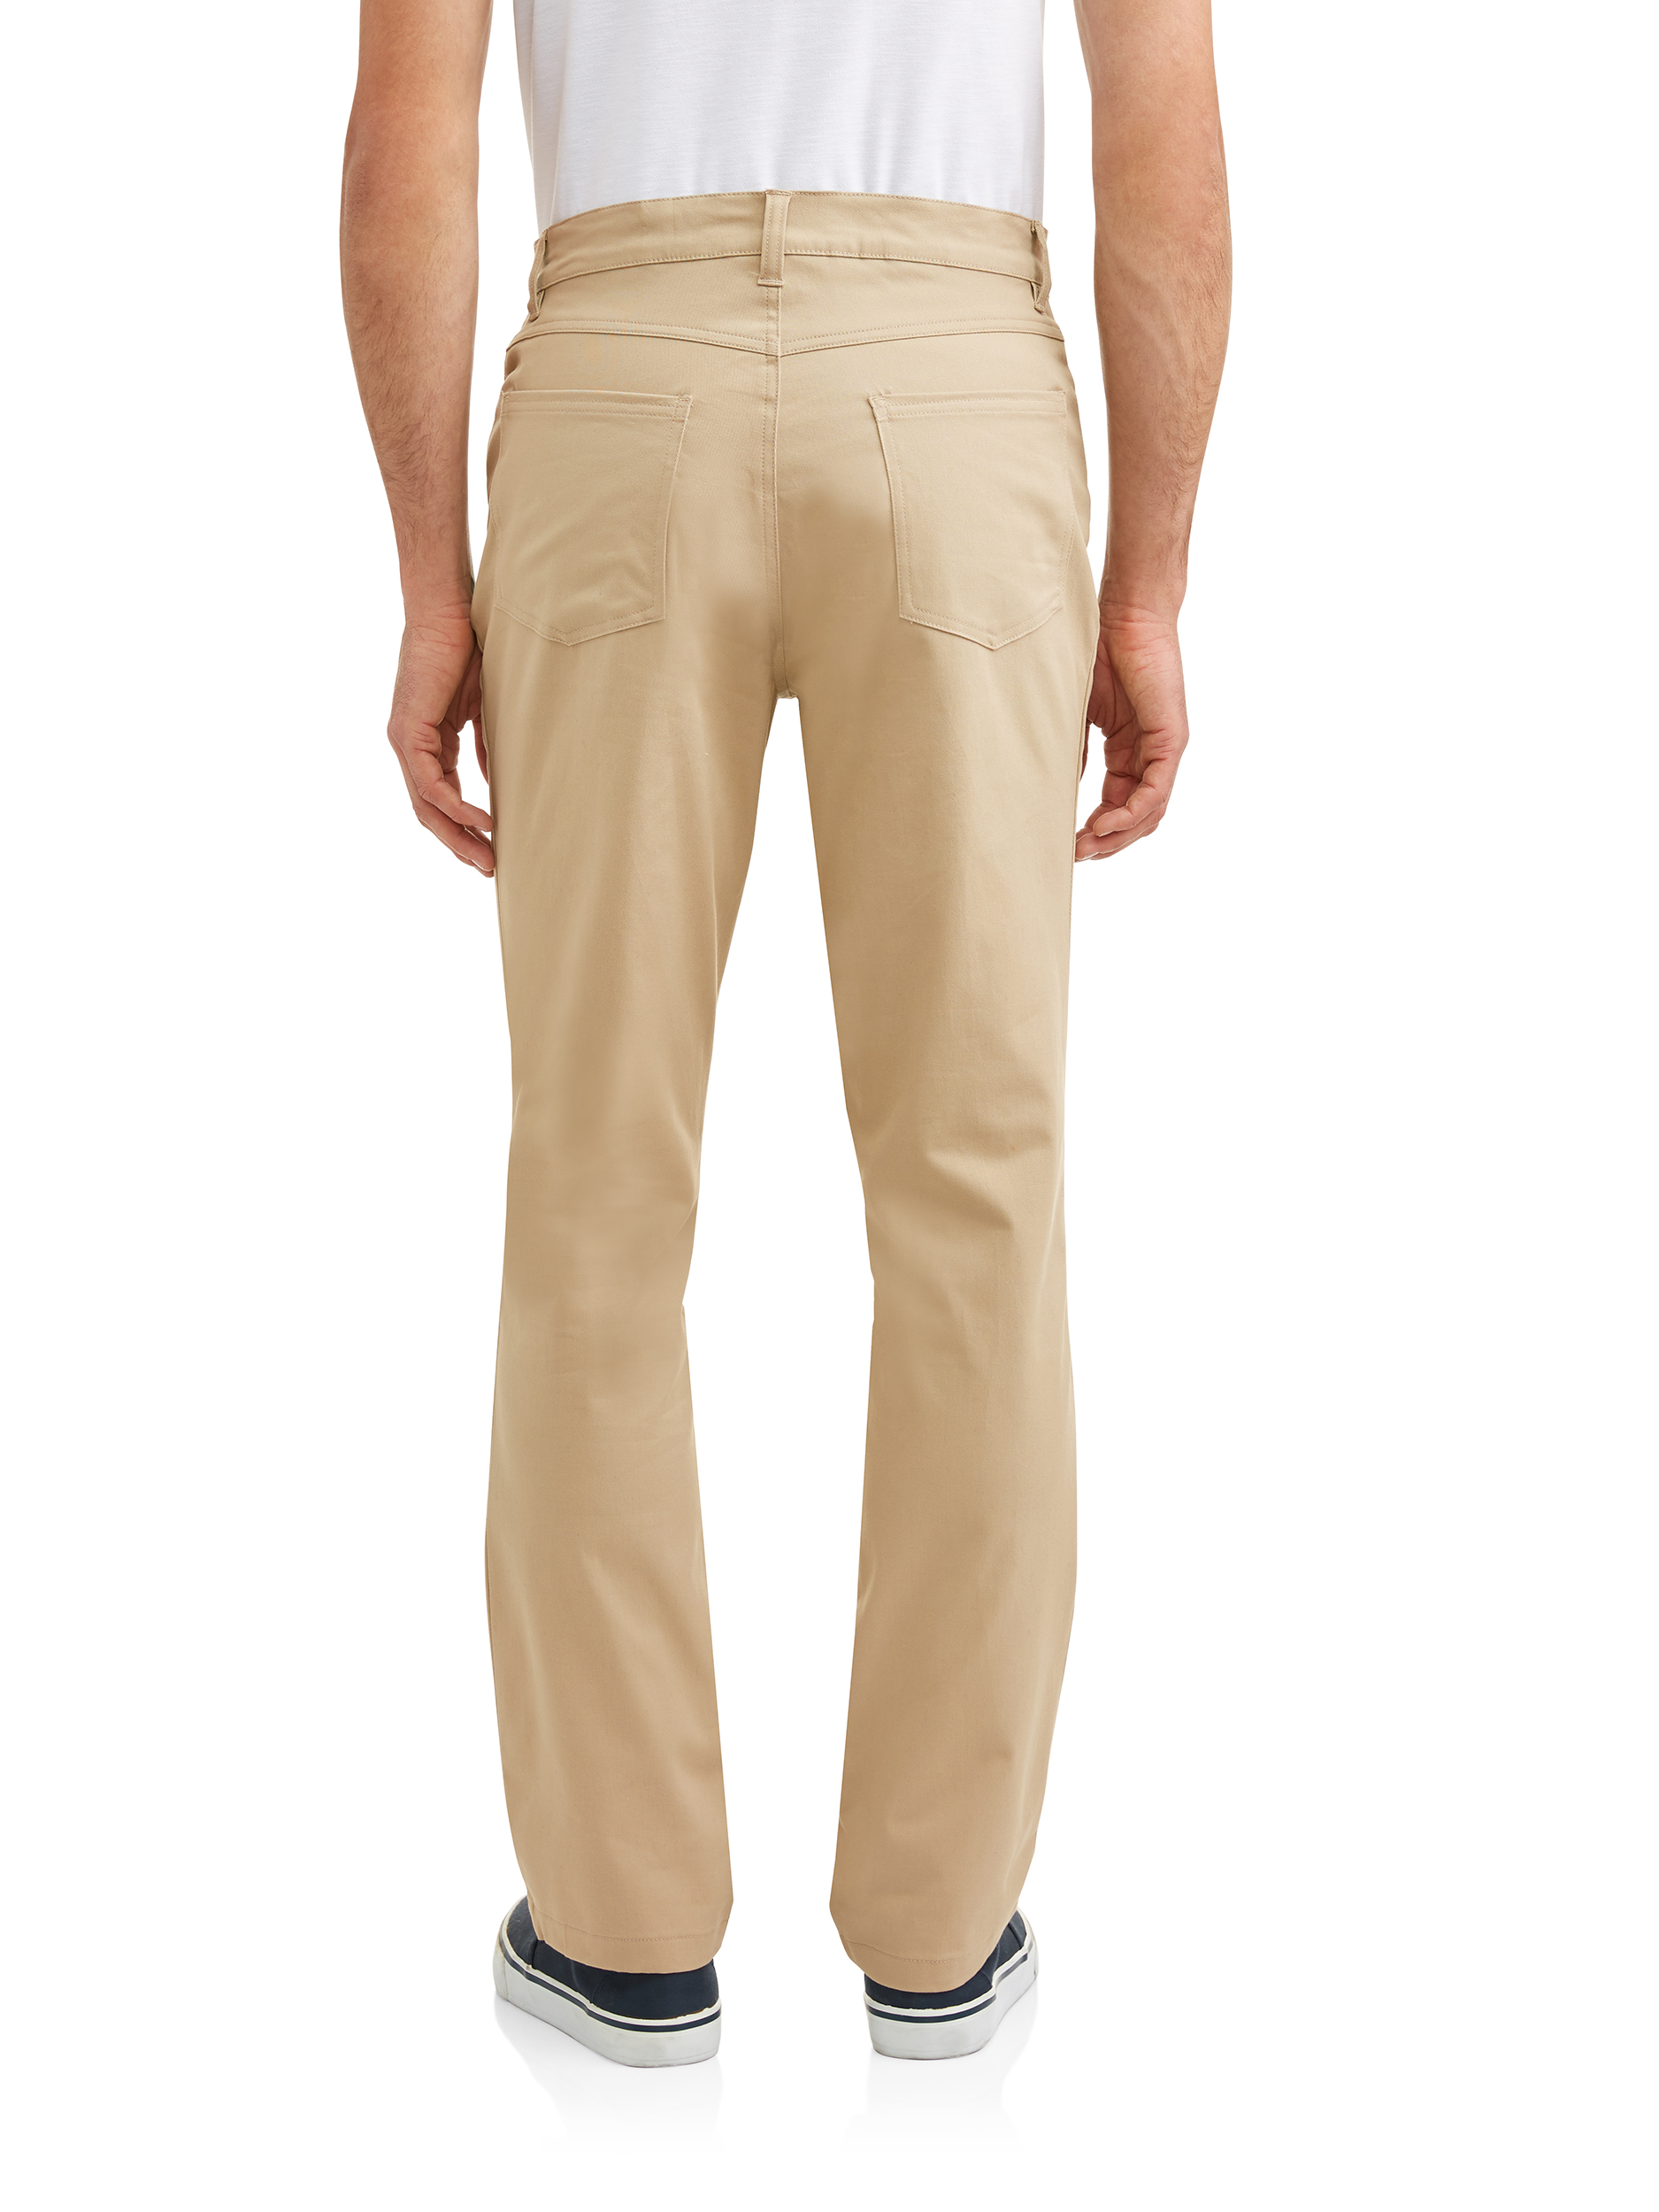 Real School Young Men's Uniform 5-Pocket Stretch Skinny Leg Pant - image 2 of 3